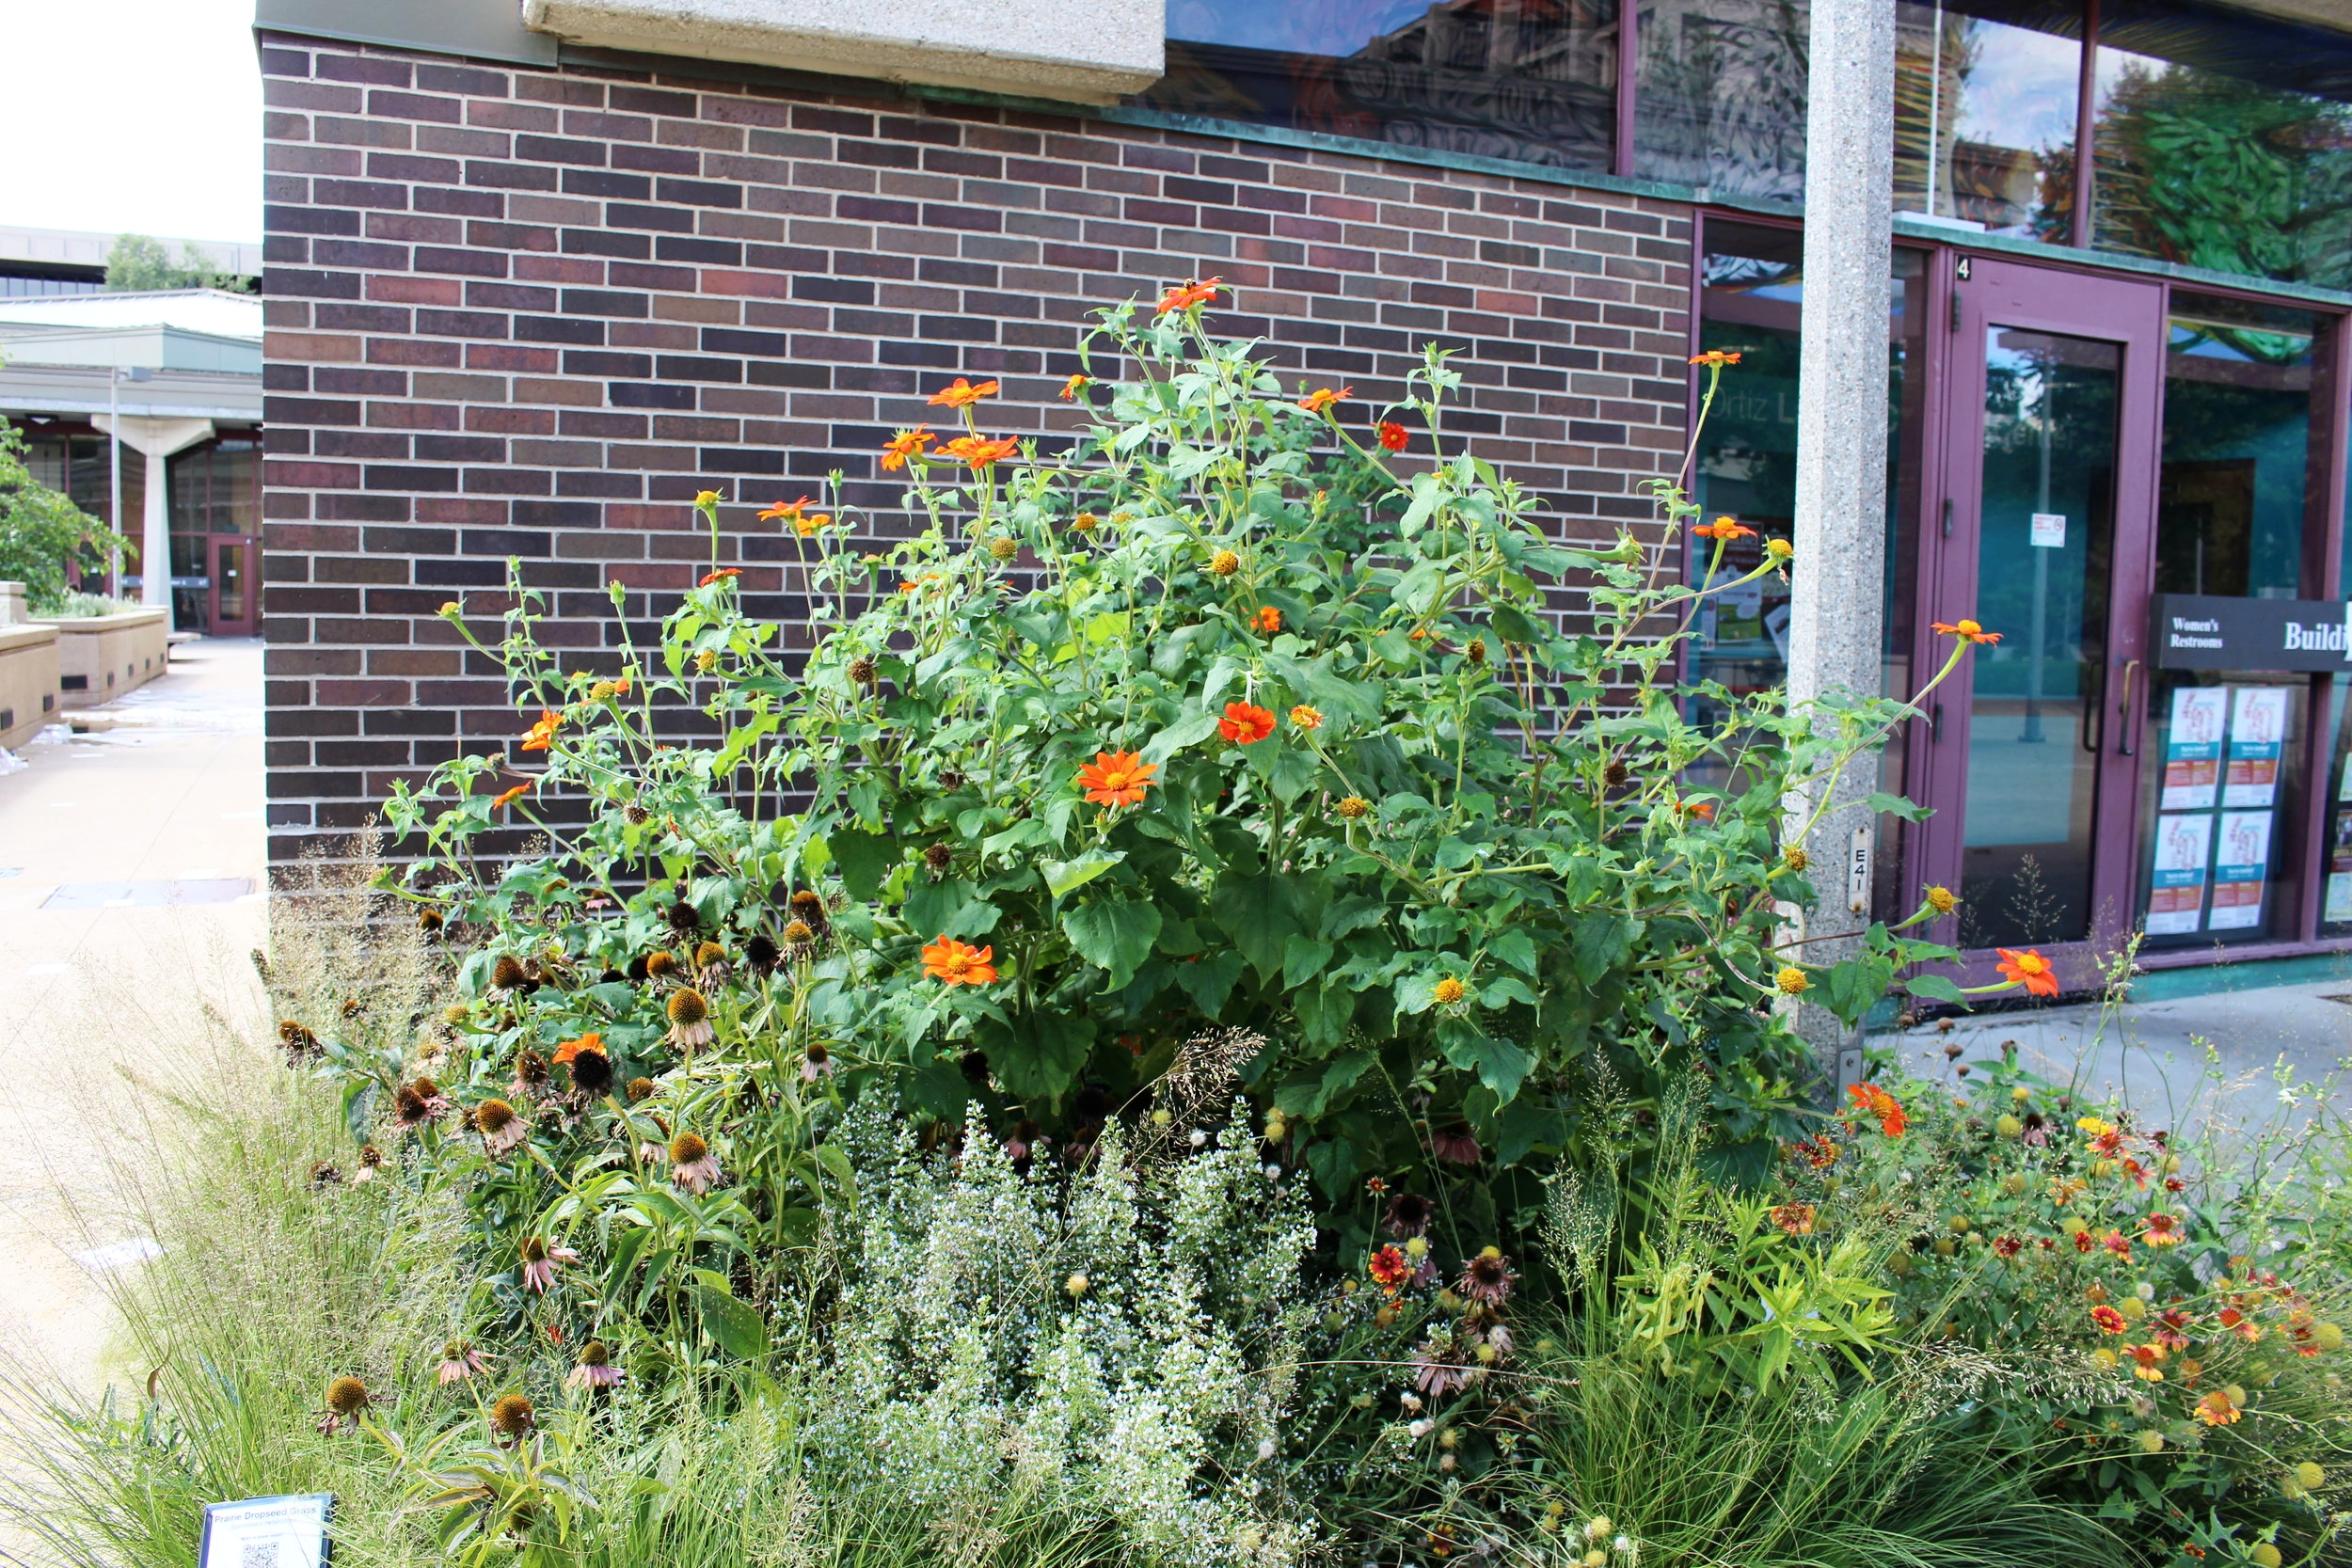 Picture of pollinator plants in garden